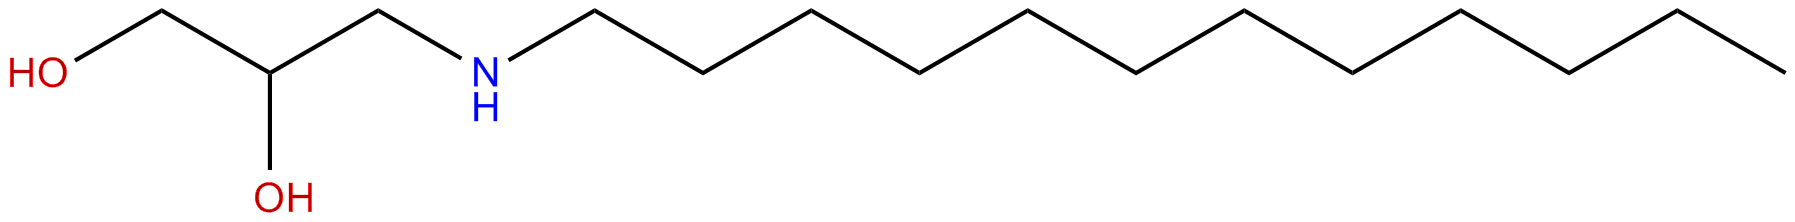 Image of 3-dodecylamino-1,2-propanediol